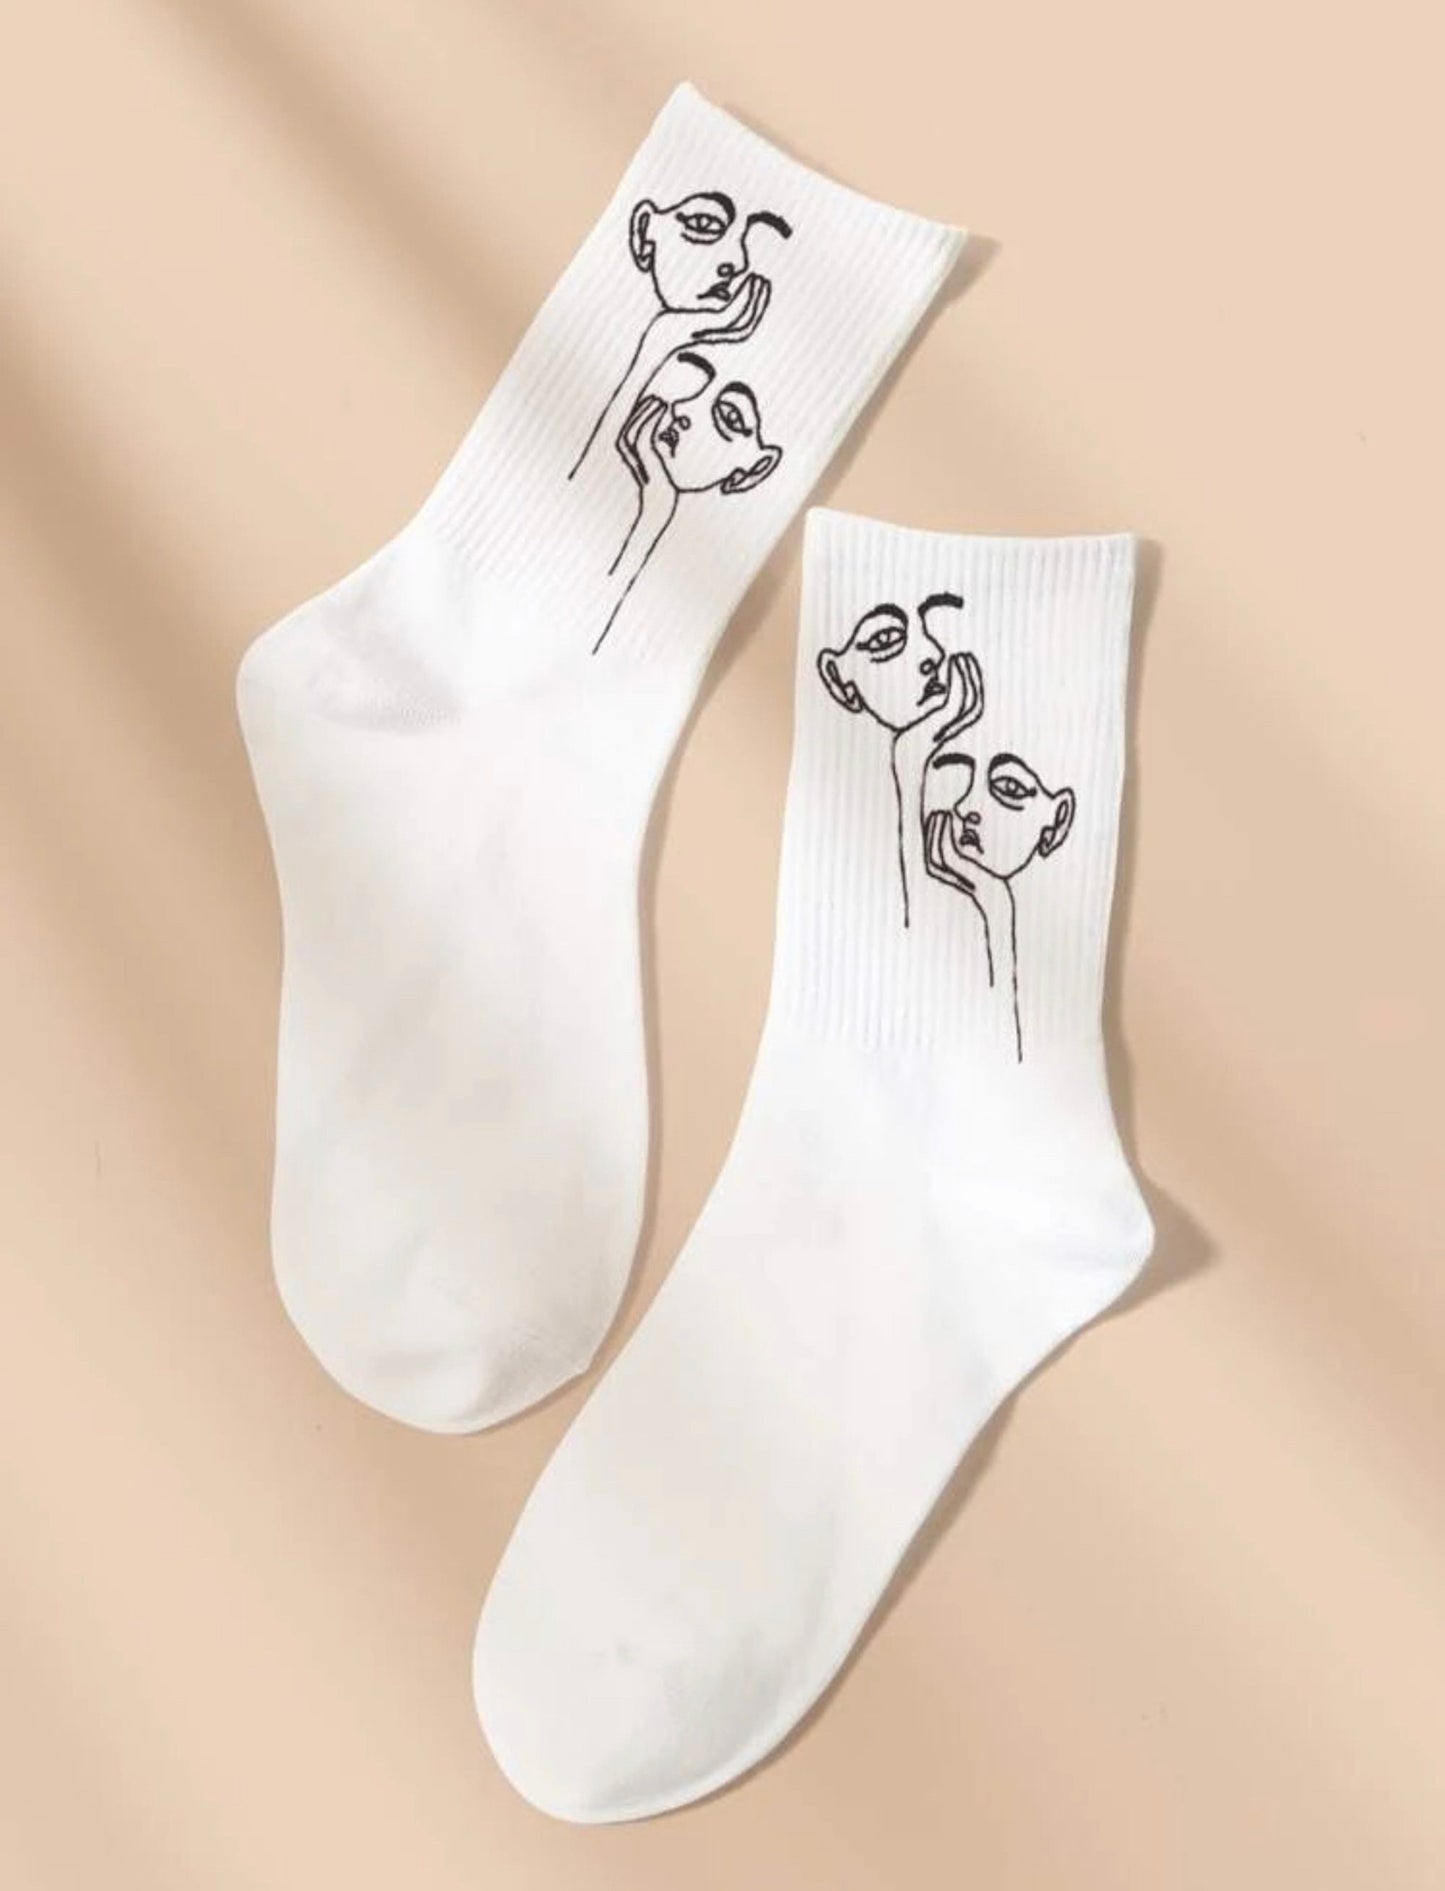 Cotton long crew socks artsy graphic socks figure white cool